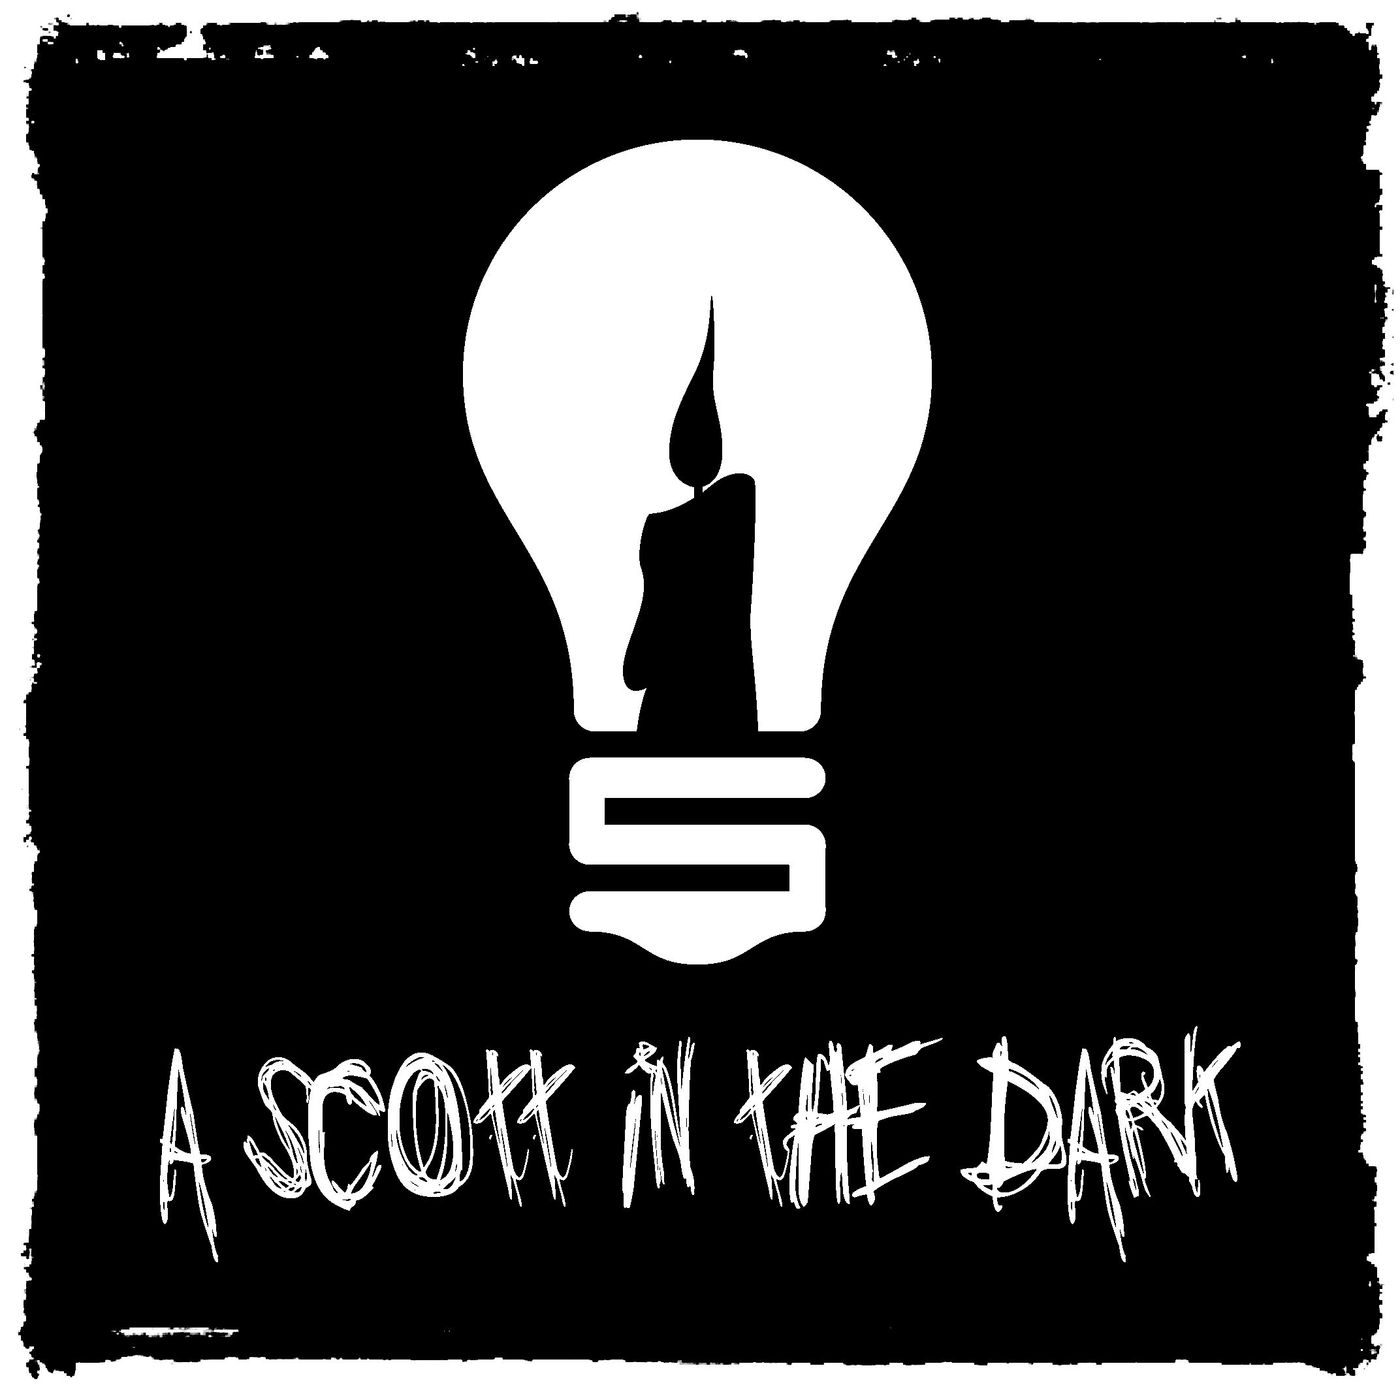 [A Scott in the Dark] Episode 14: A Weekend in St Louis